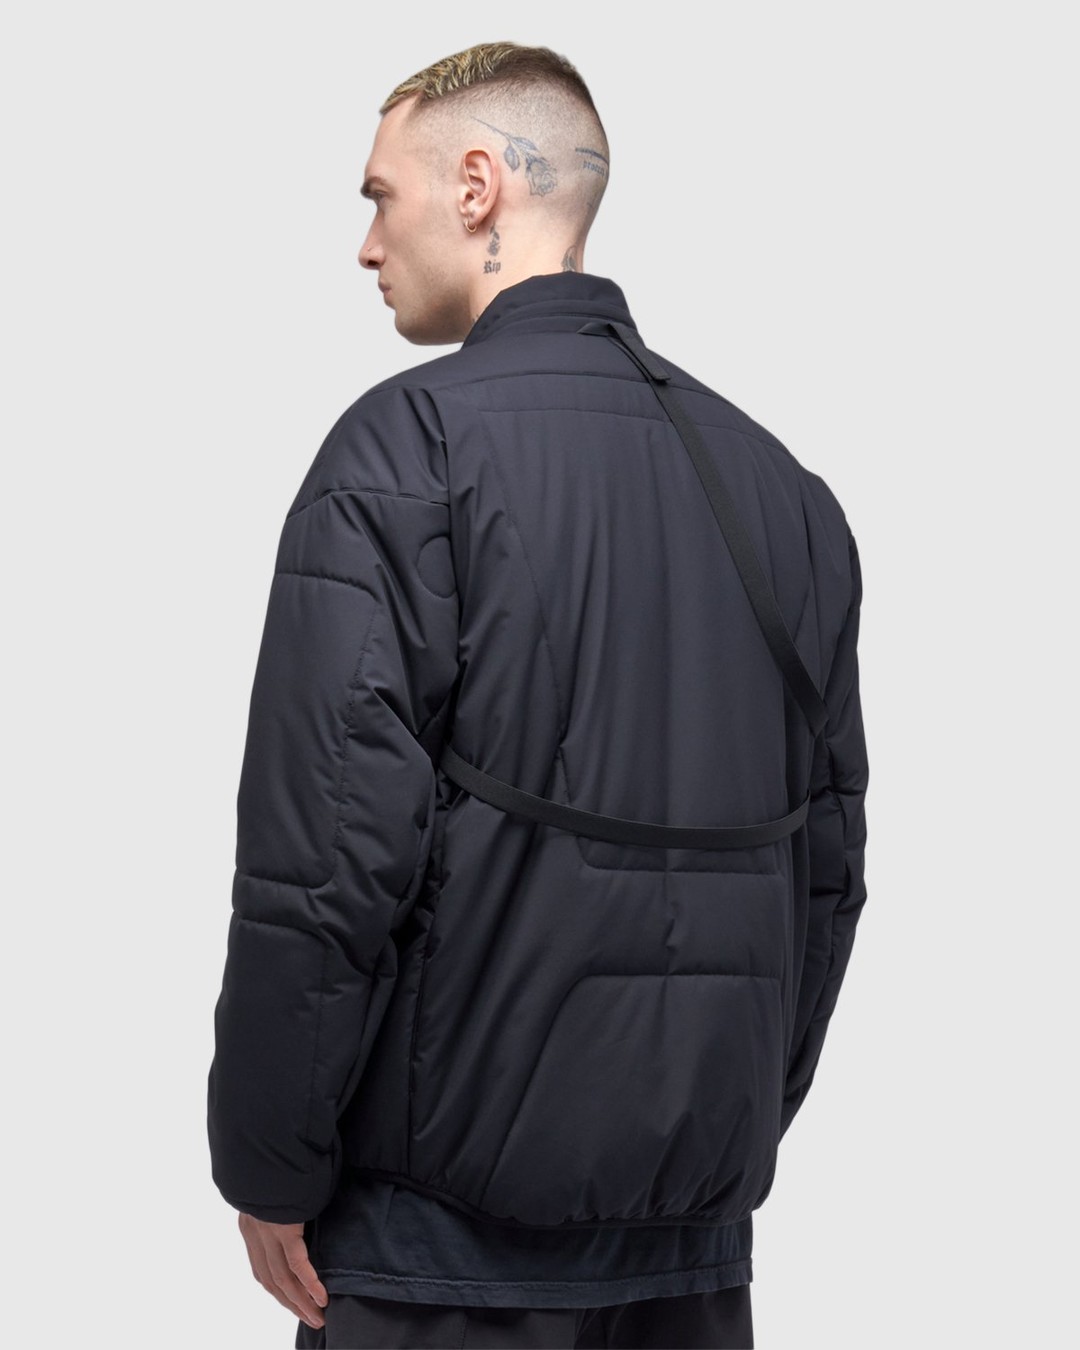 ACRONYM – J91-WS Jacket Black - Outerwear - Black - Image 8